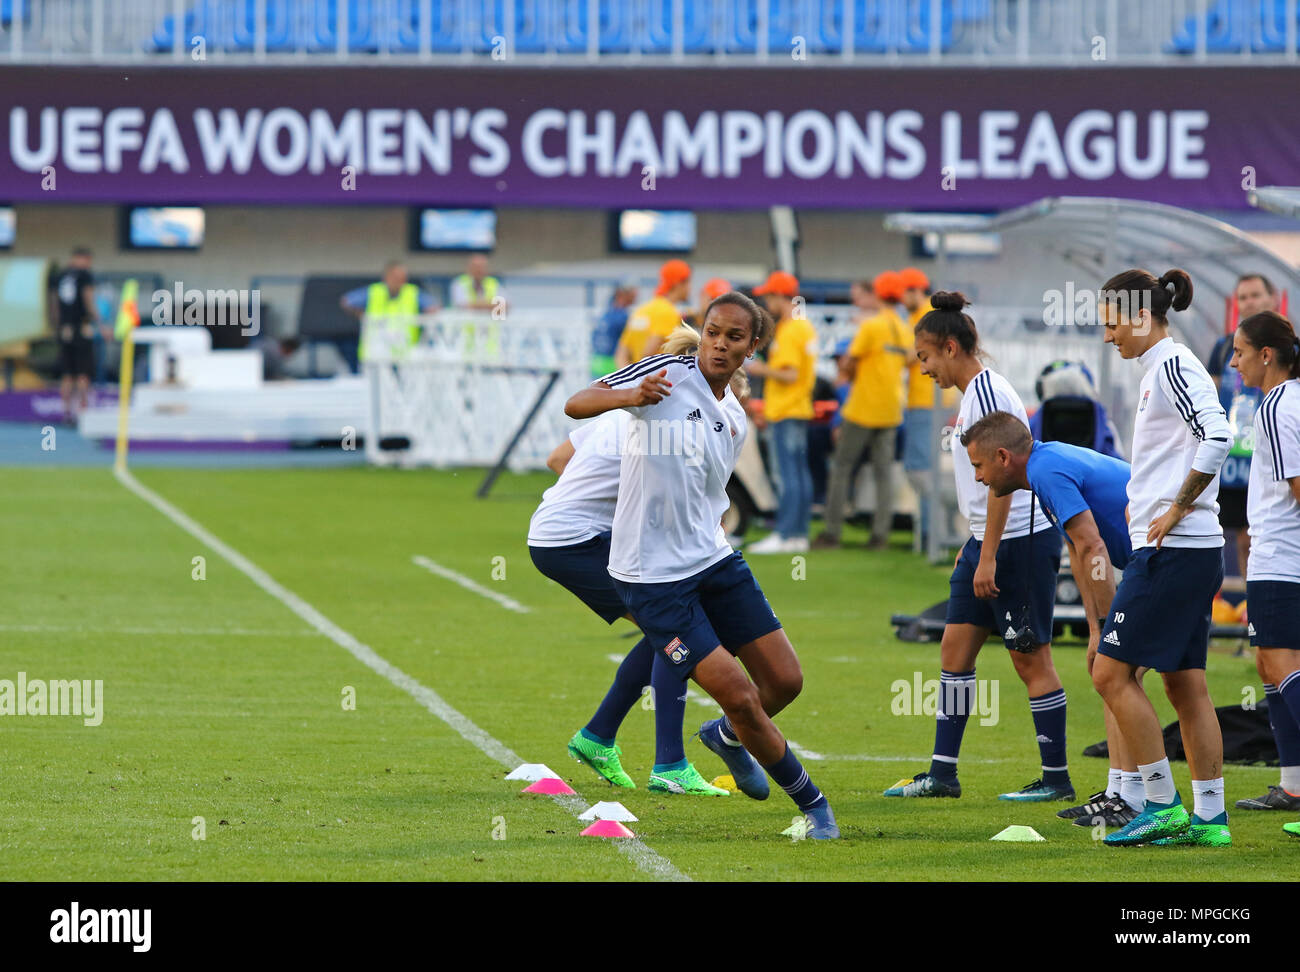 Marjolen Wafula Nekesa of Slavia (left) celebrates goal during the final  round of women Champions